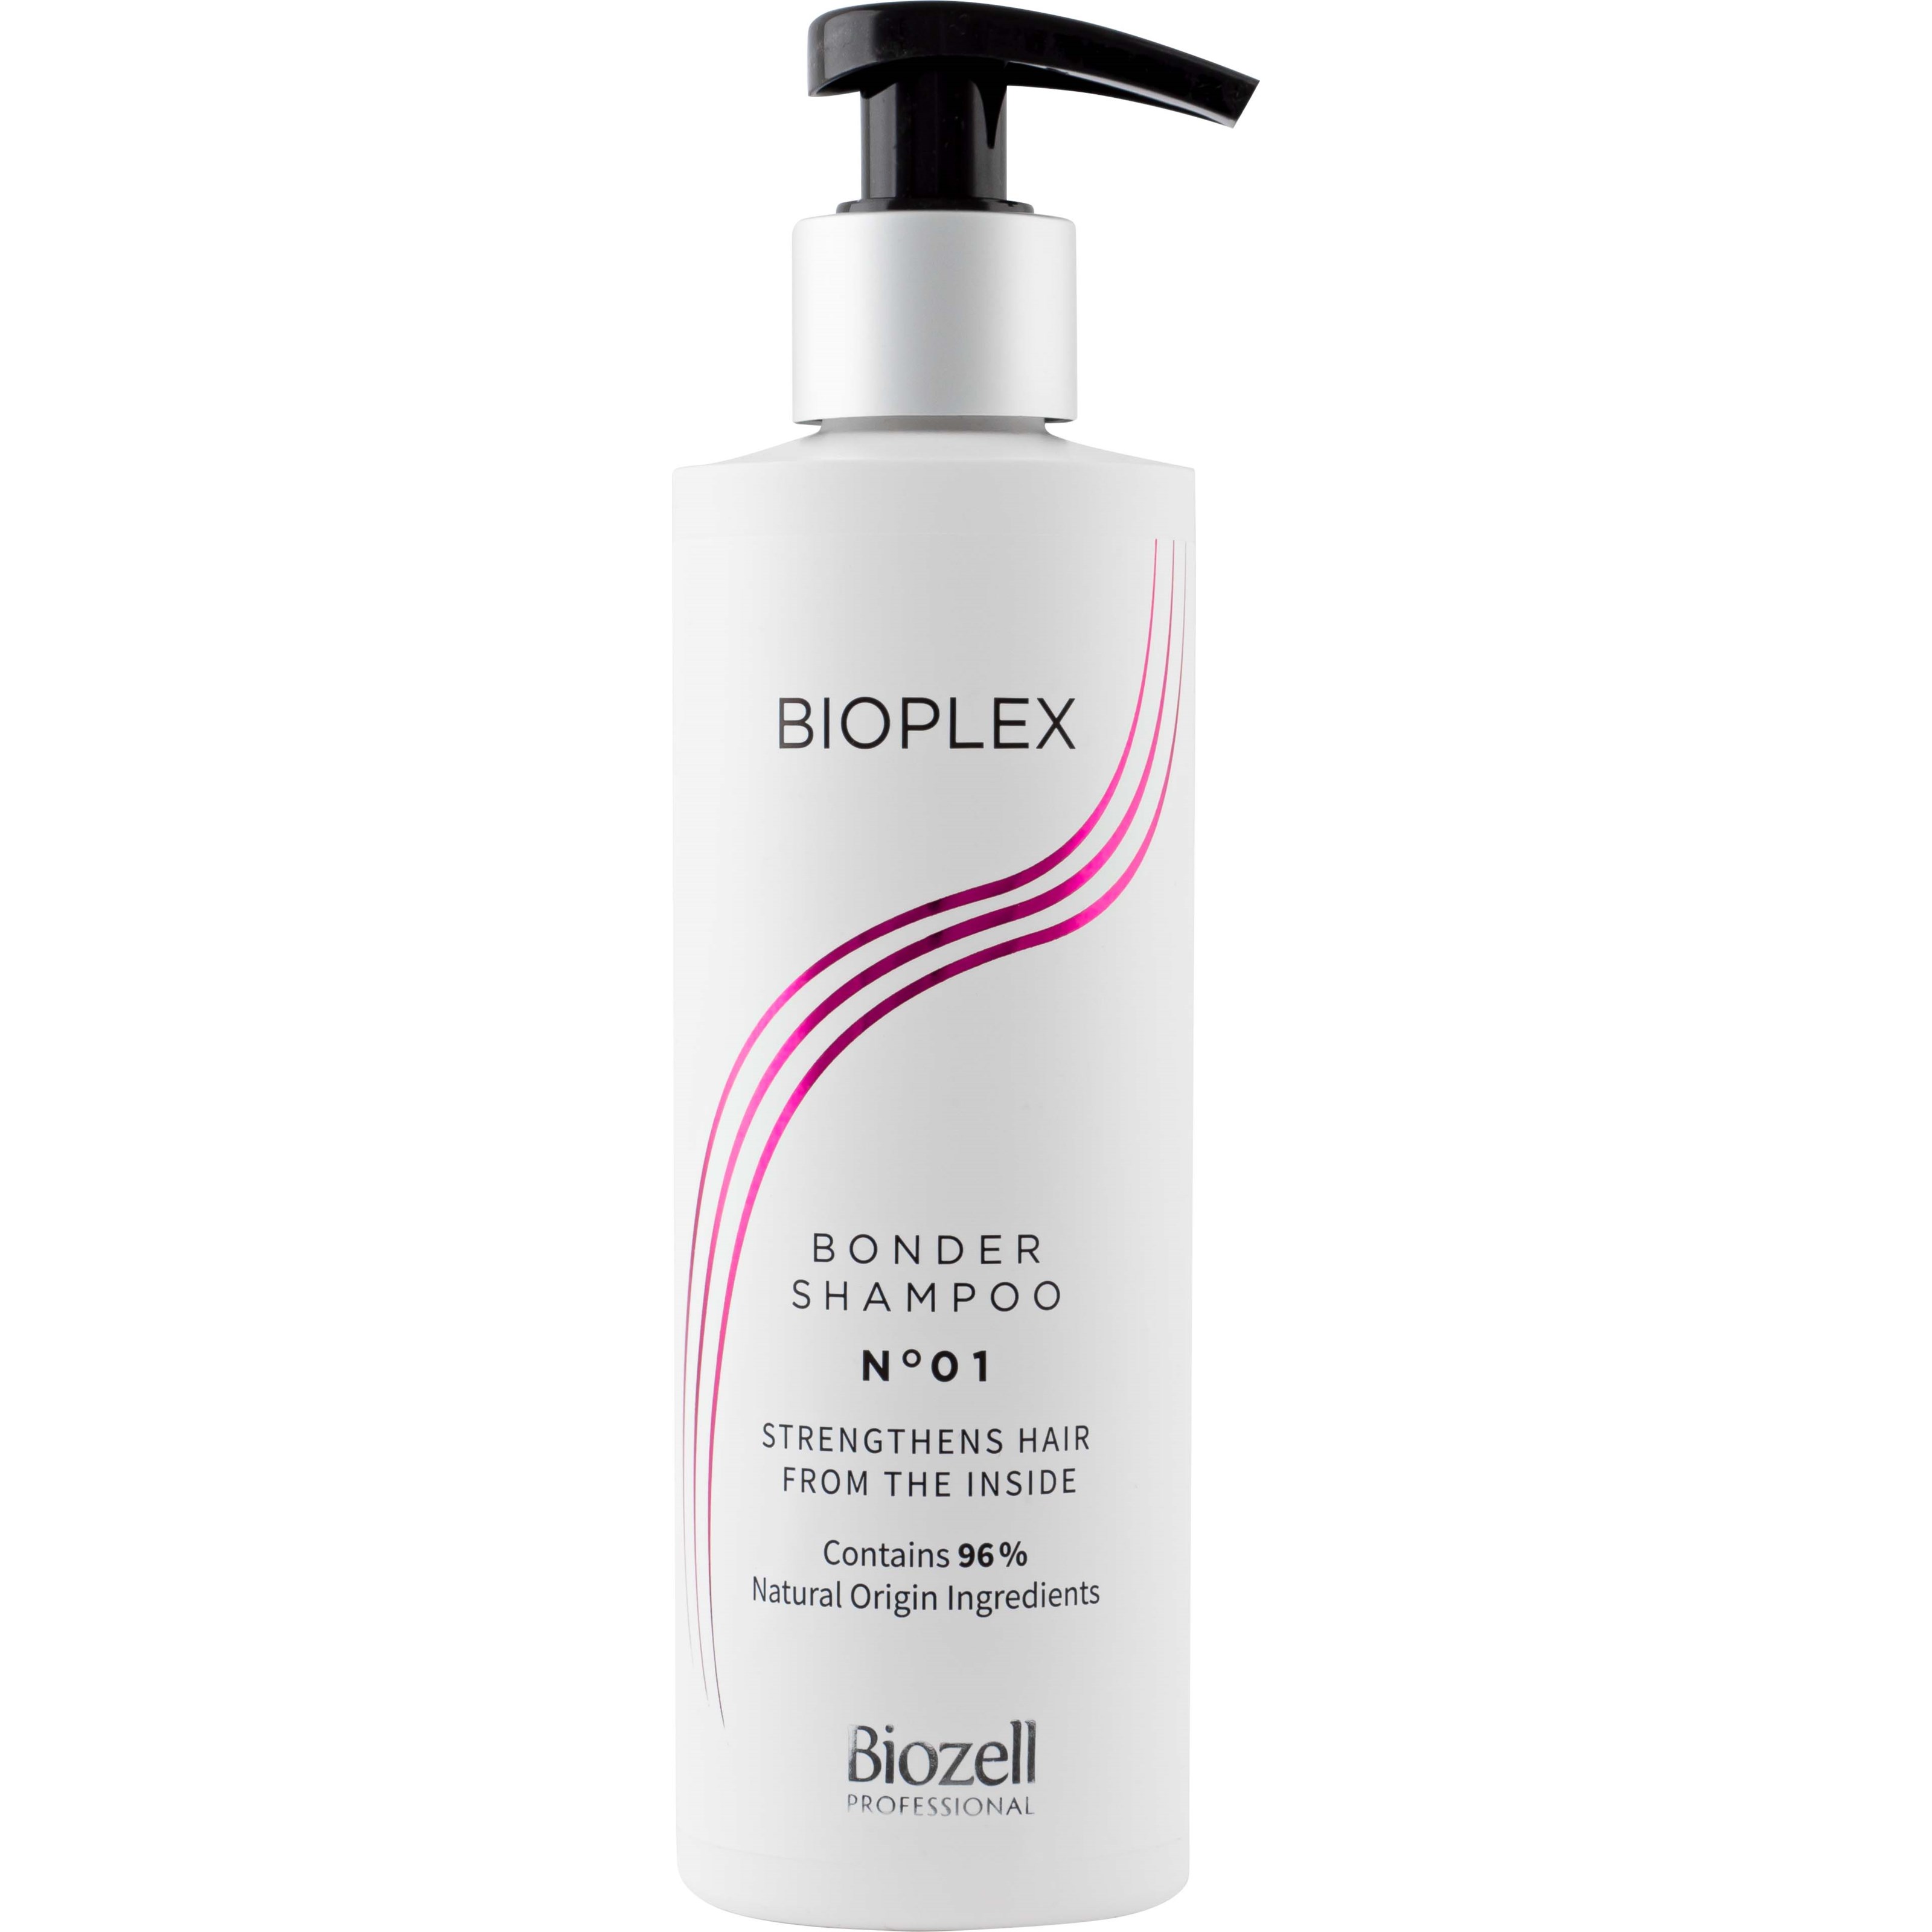 Biozell BIOPLEX Shampoo No 01 250 ml